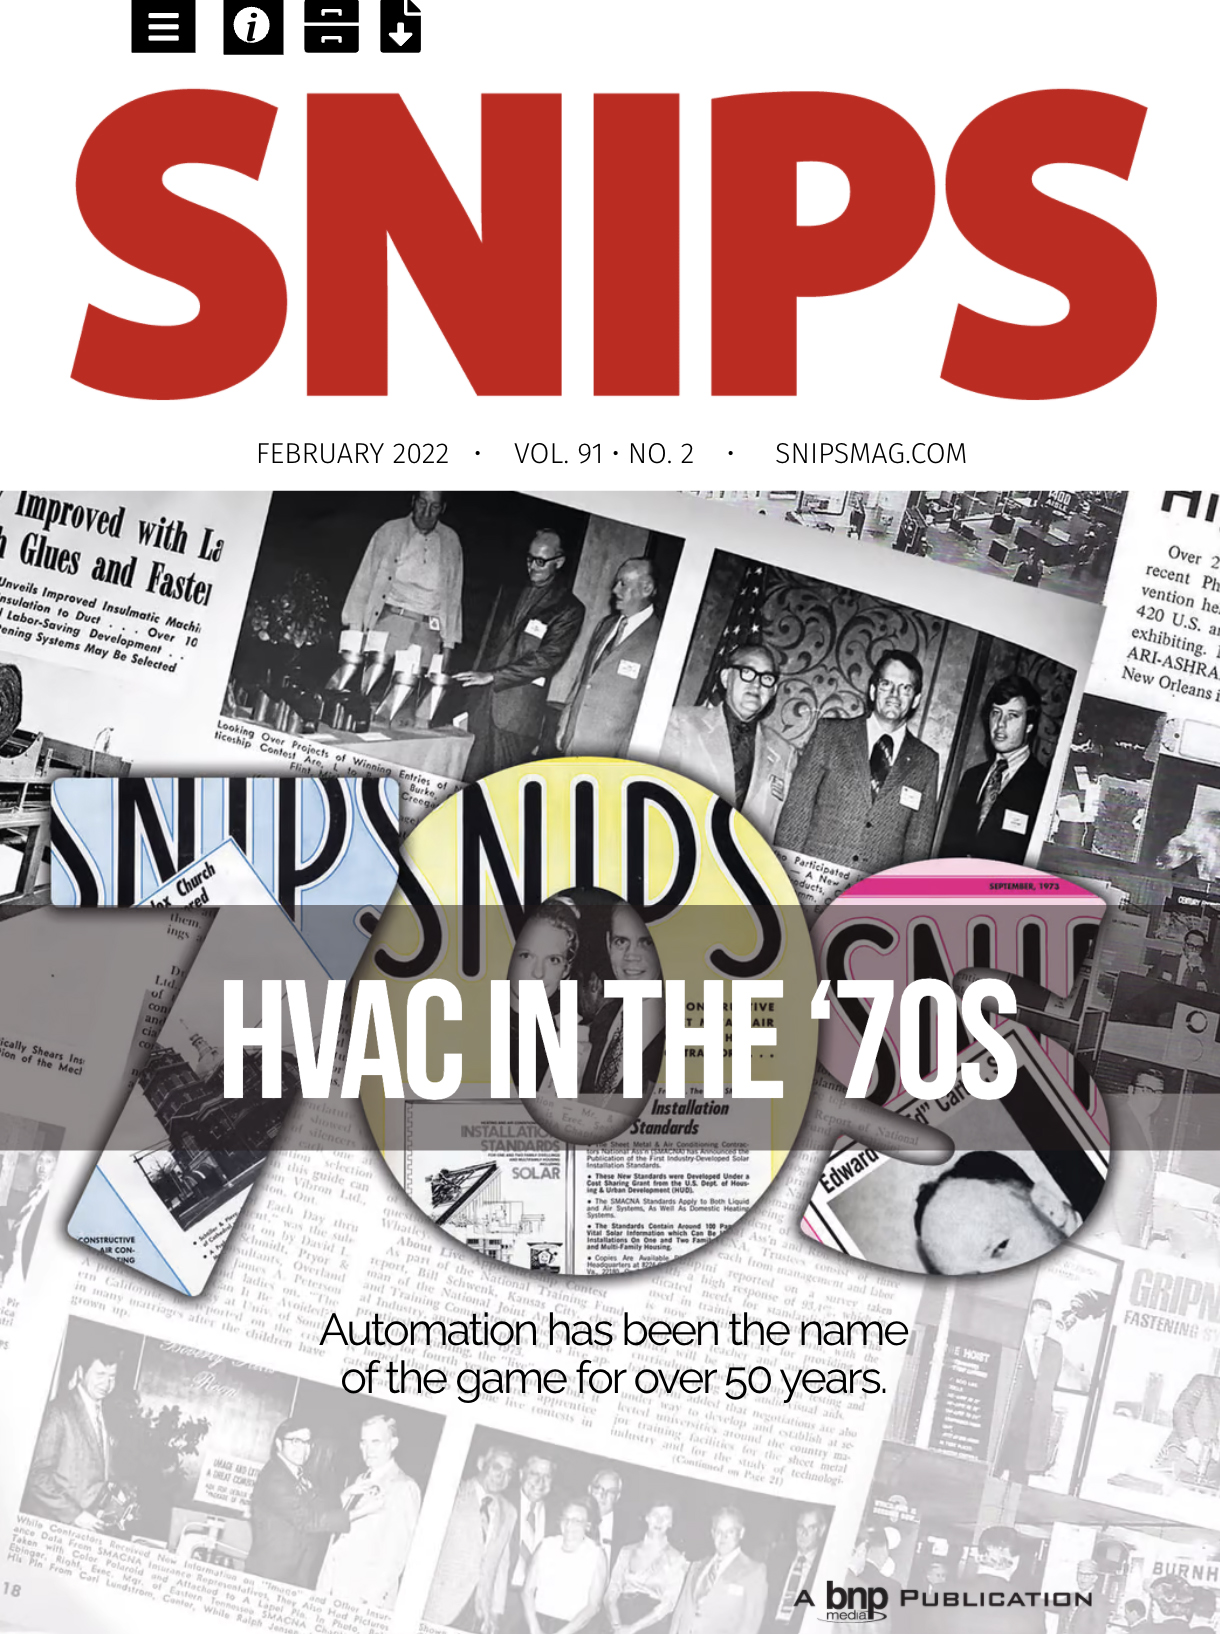 SNIPS NEWS February 2022 Cover